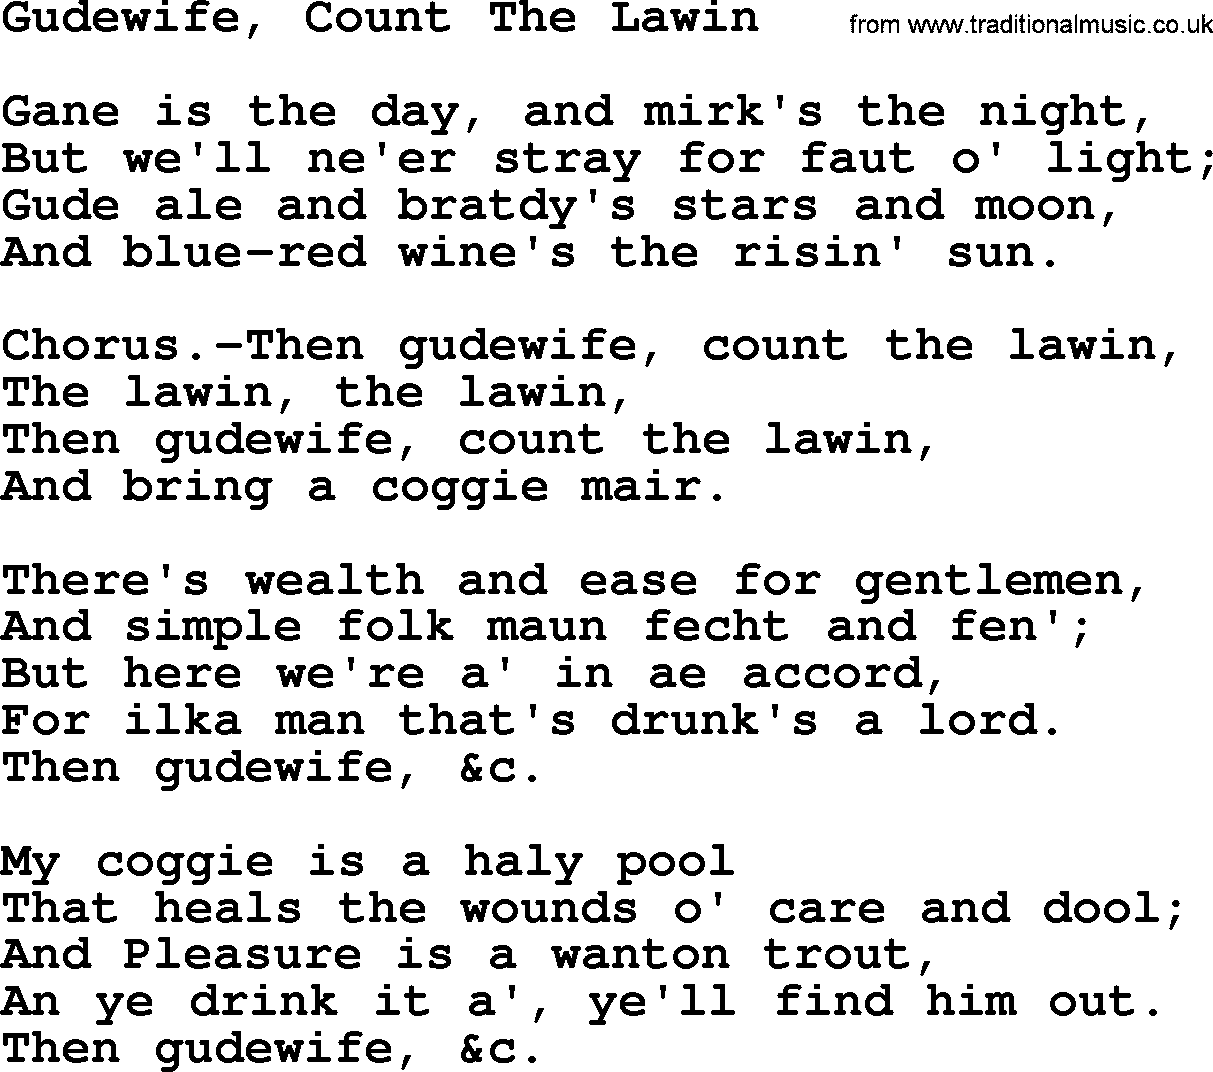 Robert Burns Songs & Lyrics: Gudewife, Count The Lawin